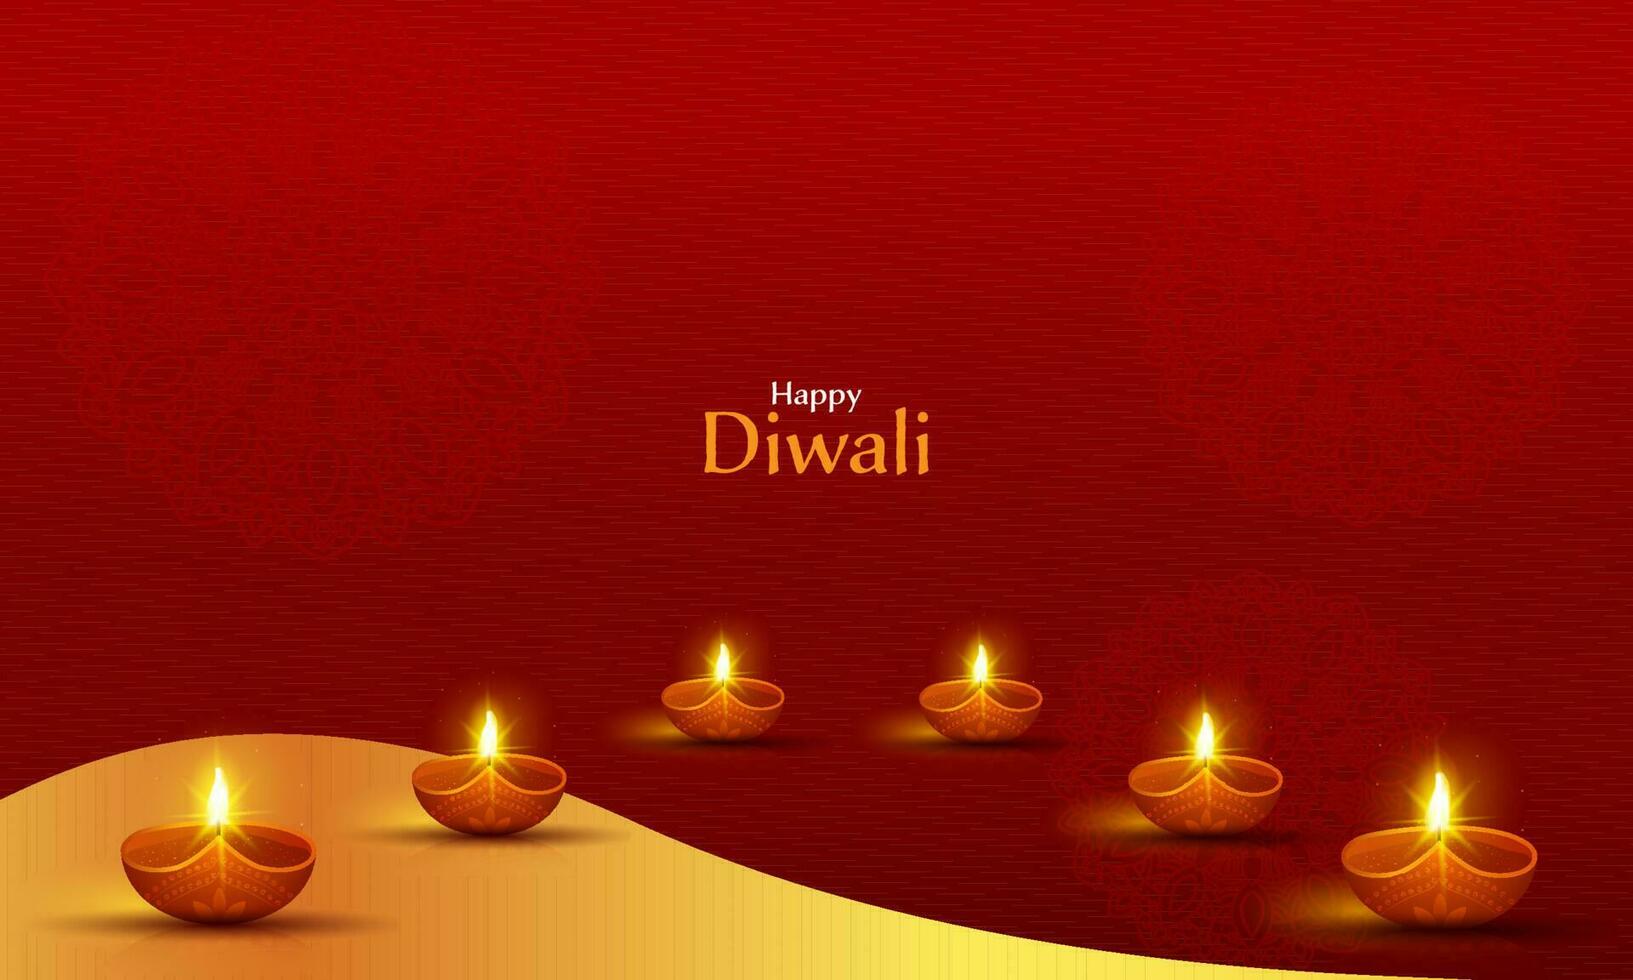 gelukkig diwali viering banier ontwerp met verlichte olie lampen Aan geel en rood mandala patroon achtergrond. vector